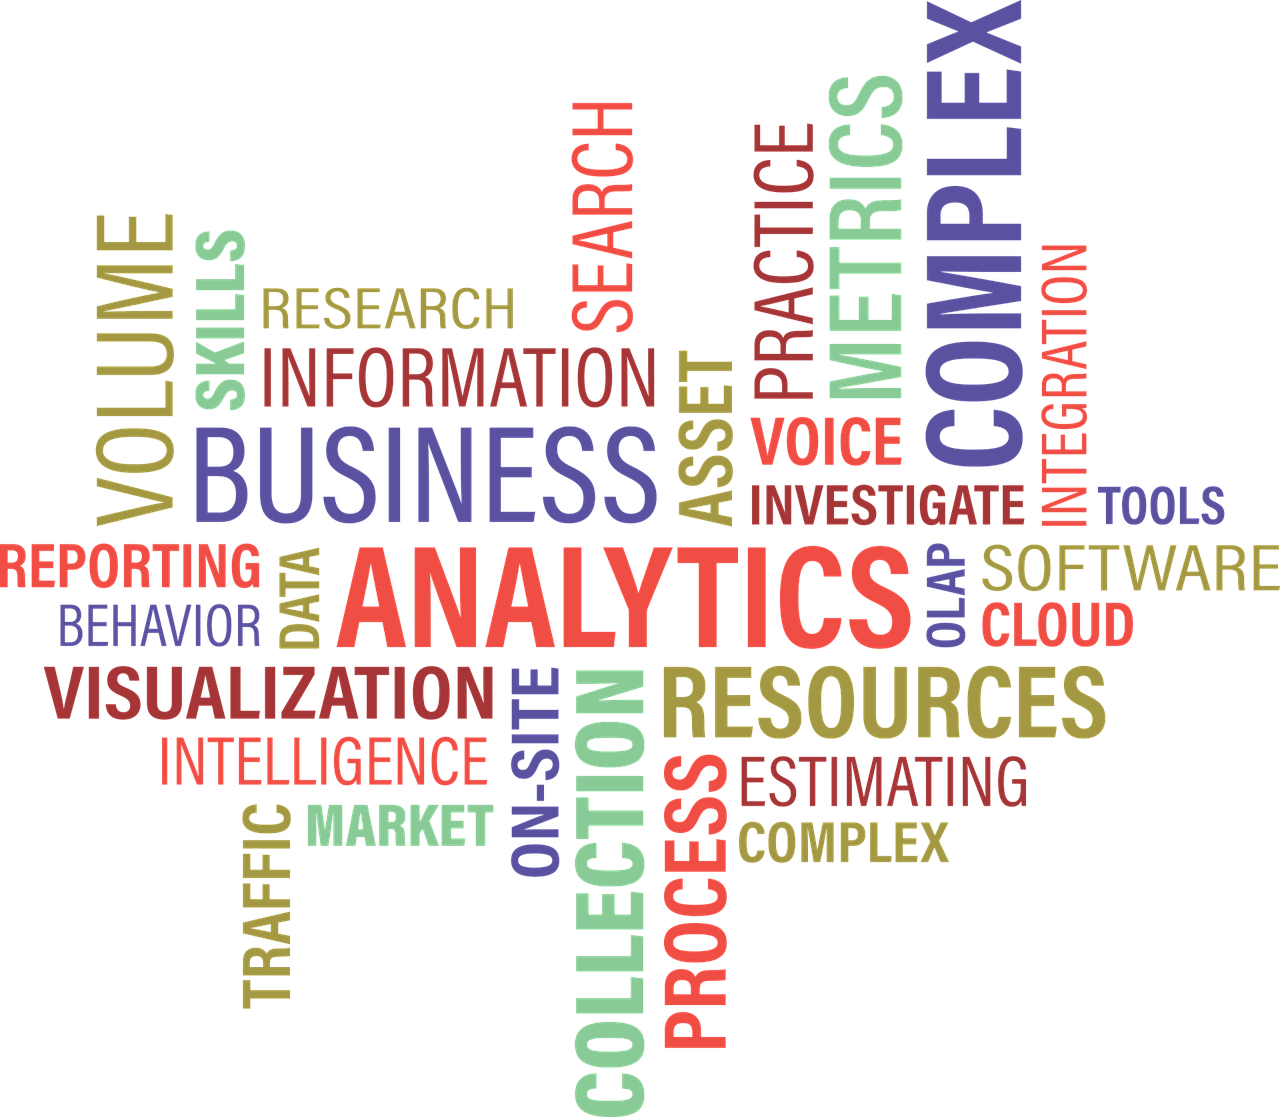 analytics business resources wordle 1368293